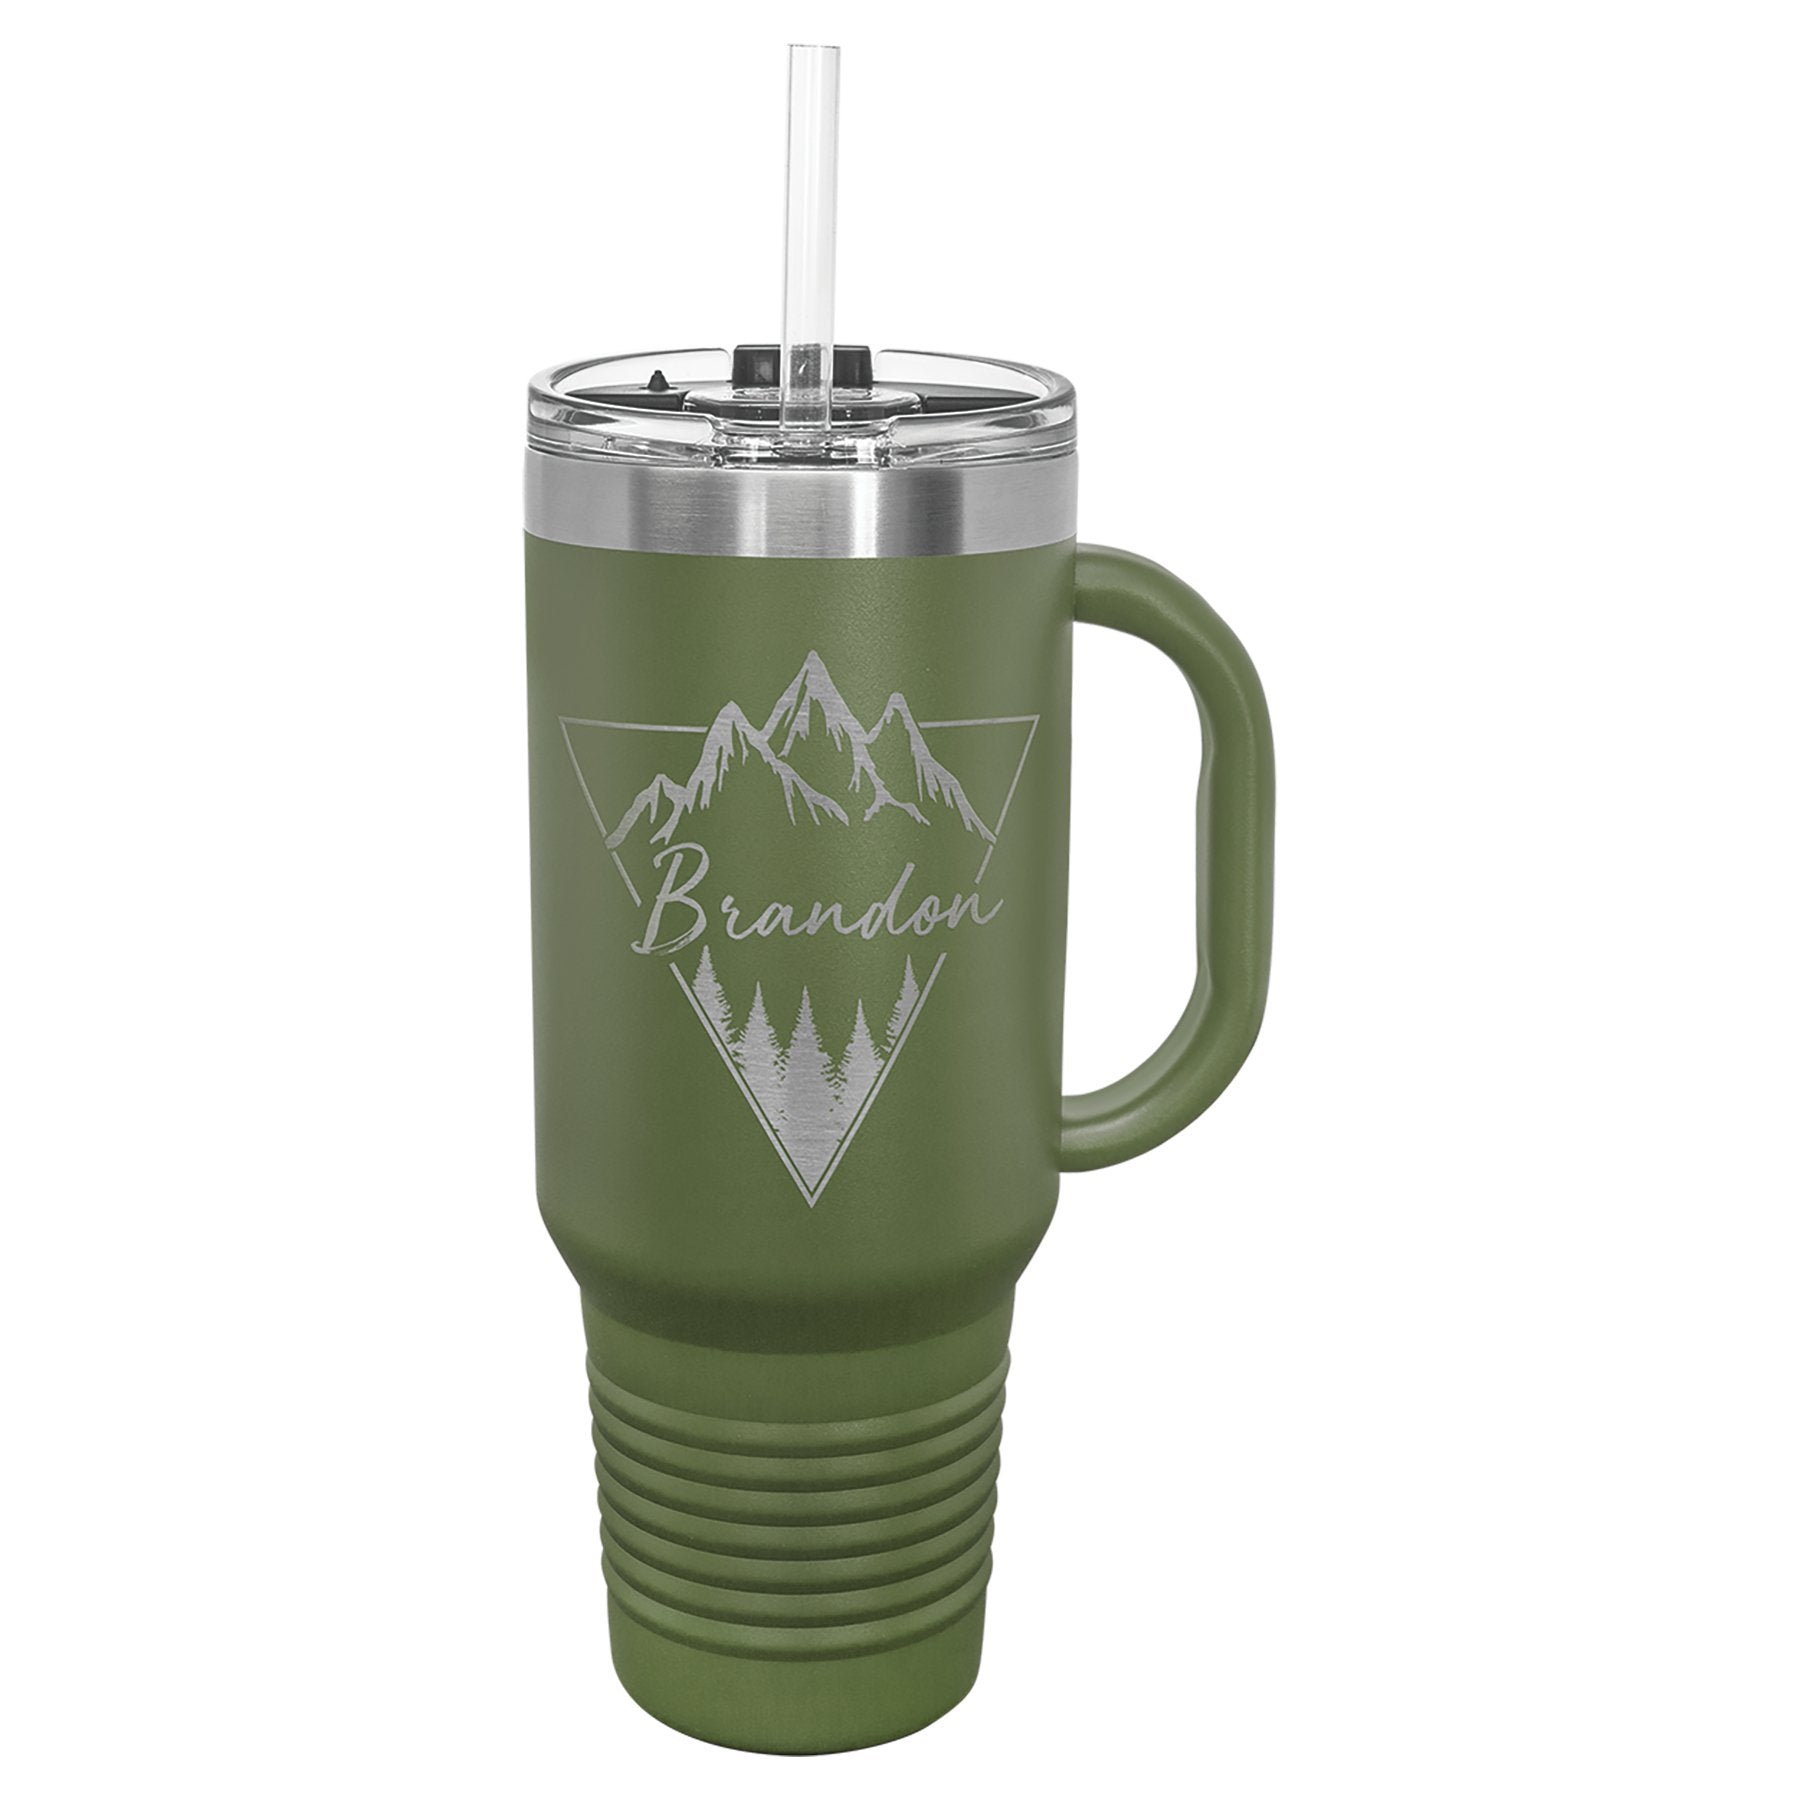 40 oz. Travel Tumbler Mug with Handle, Straw Included - Celebrate Prints